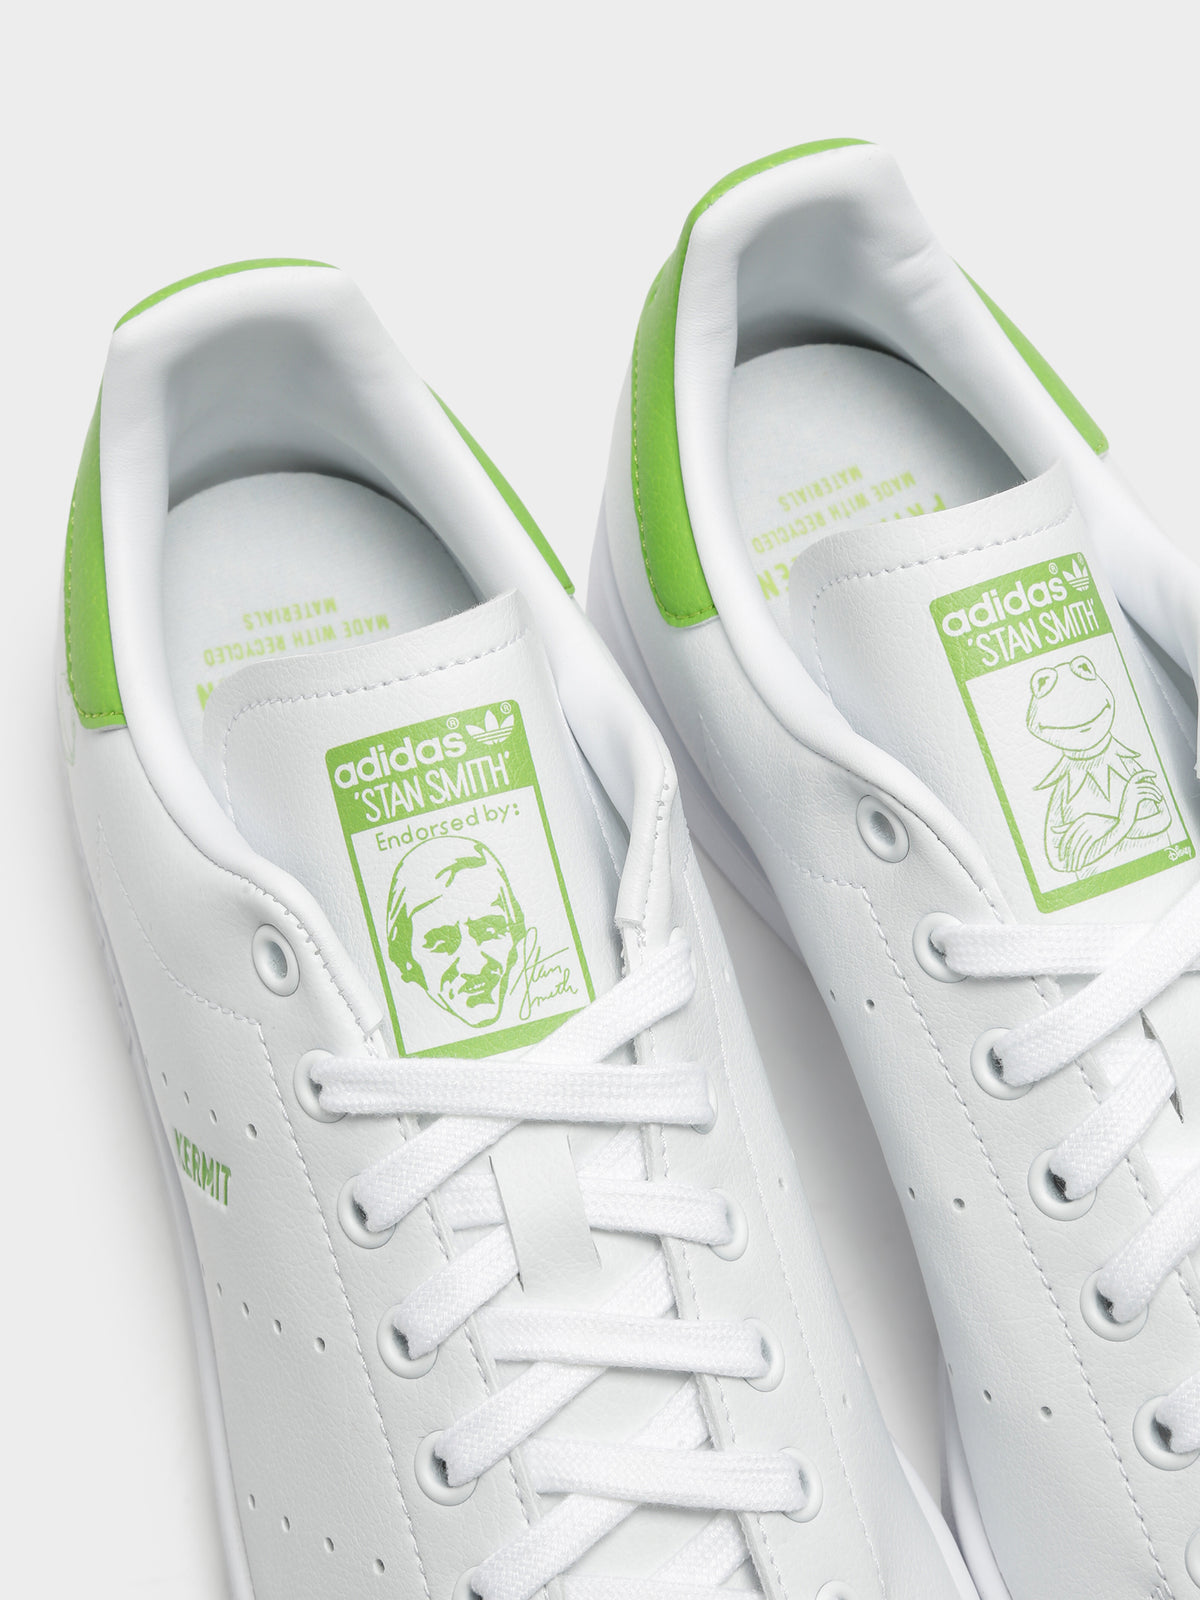 Unisex Stan Smith Kermit Sneakers in White &amp; Green